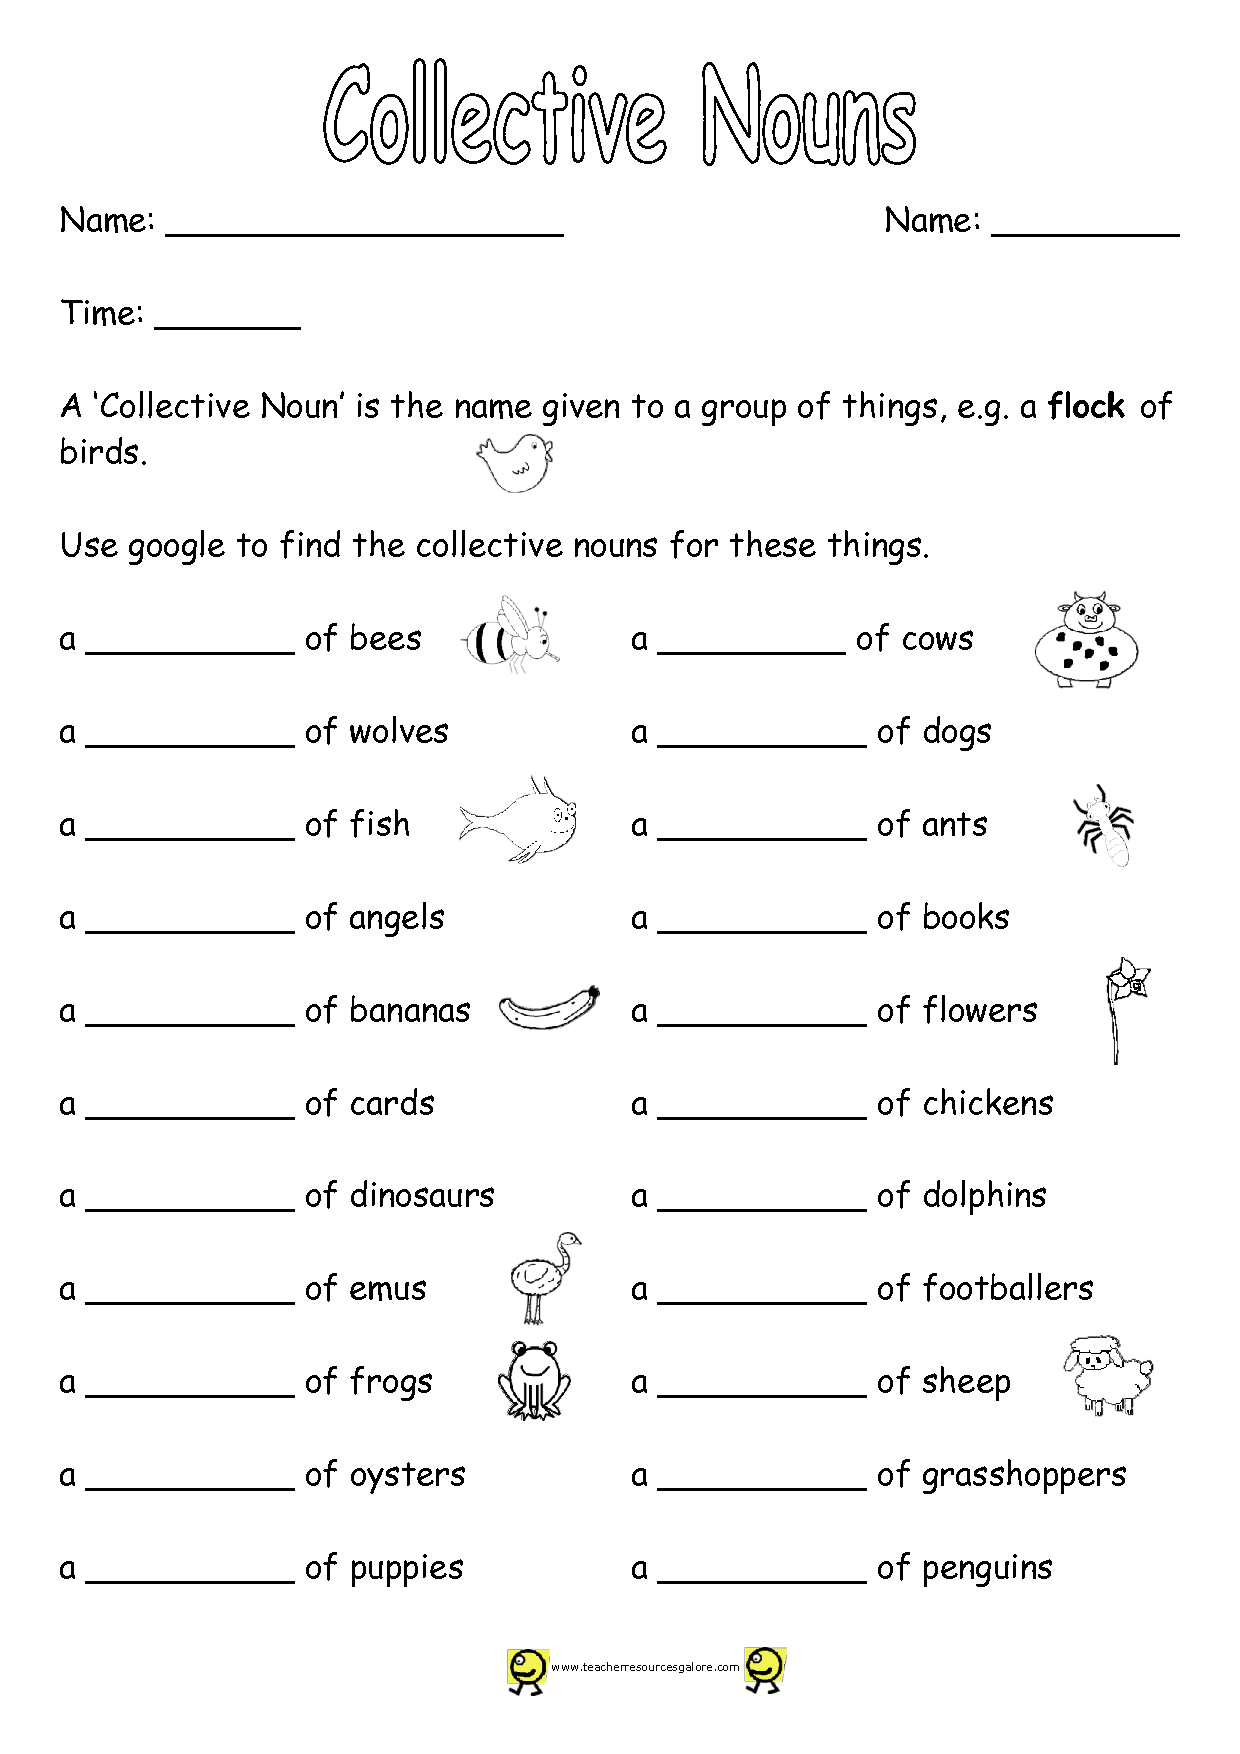 collective-nouns-activity-for-2-collective-nouns-worksheet-nouns-worksheet-collective-nouns